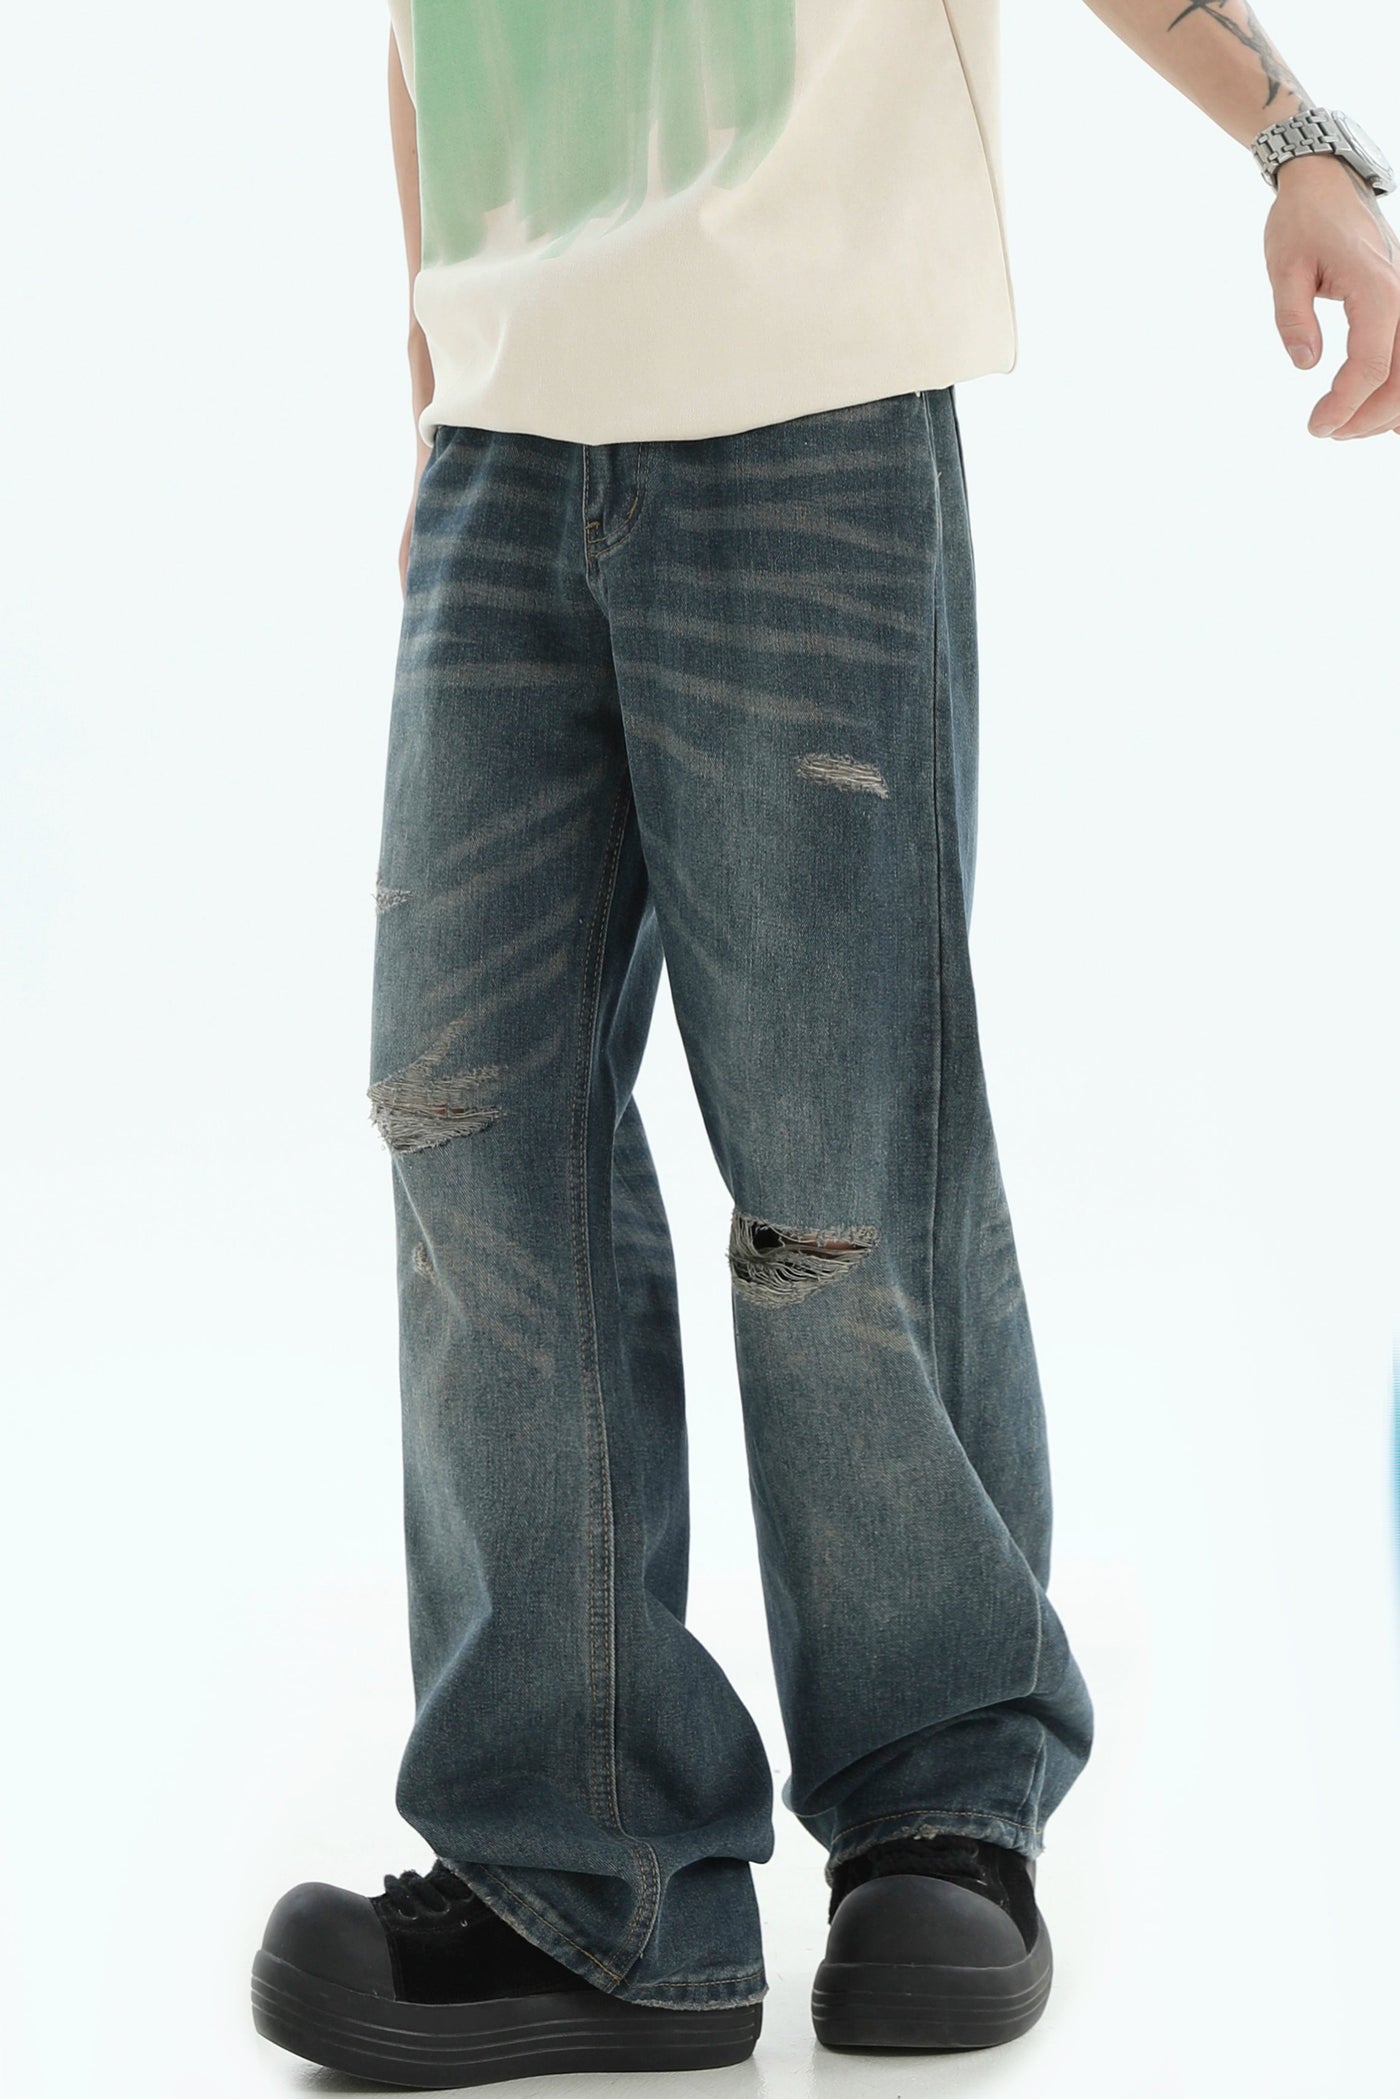 Slight Rip Details Jeans Korean Street Fashion Jeans By INS Korea Shop Online at OH Vault